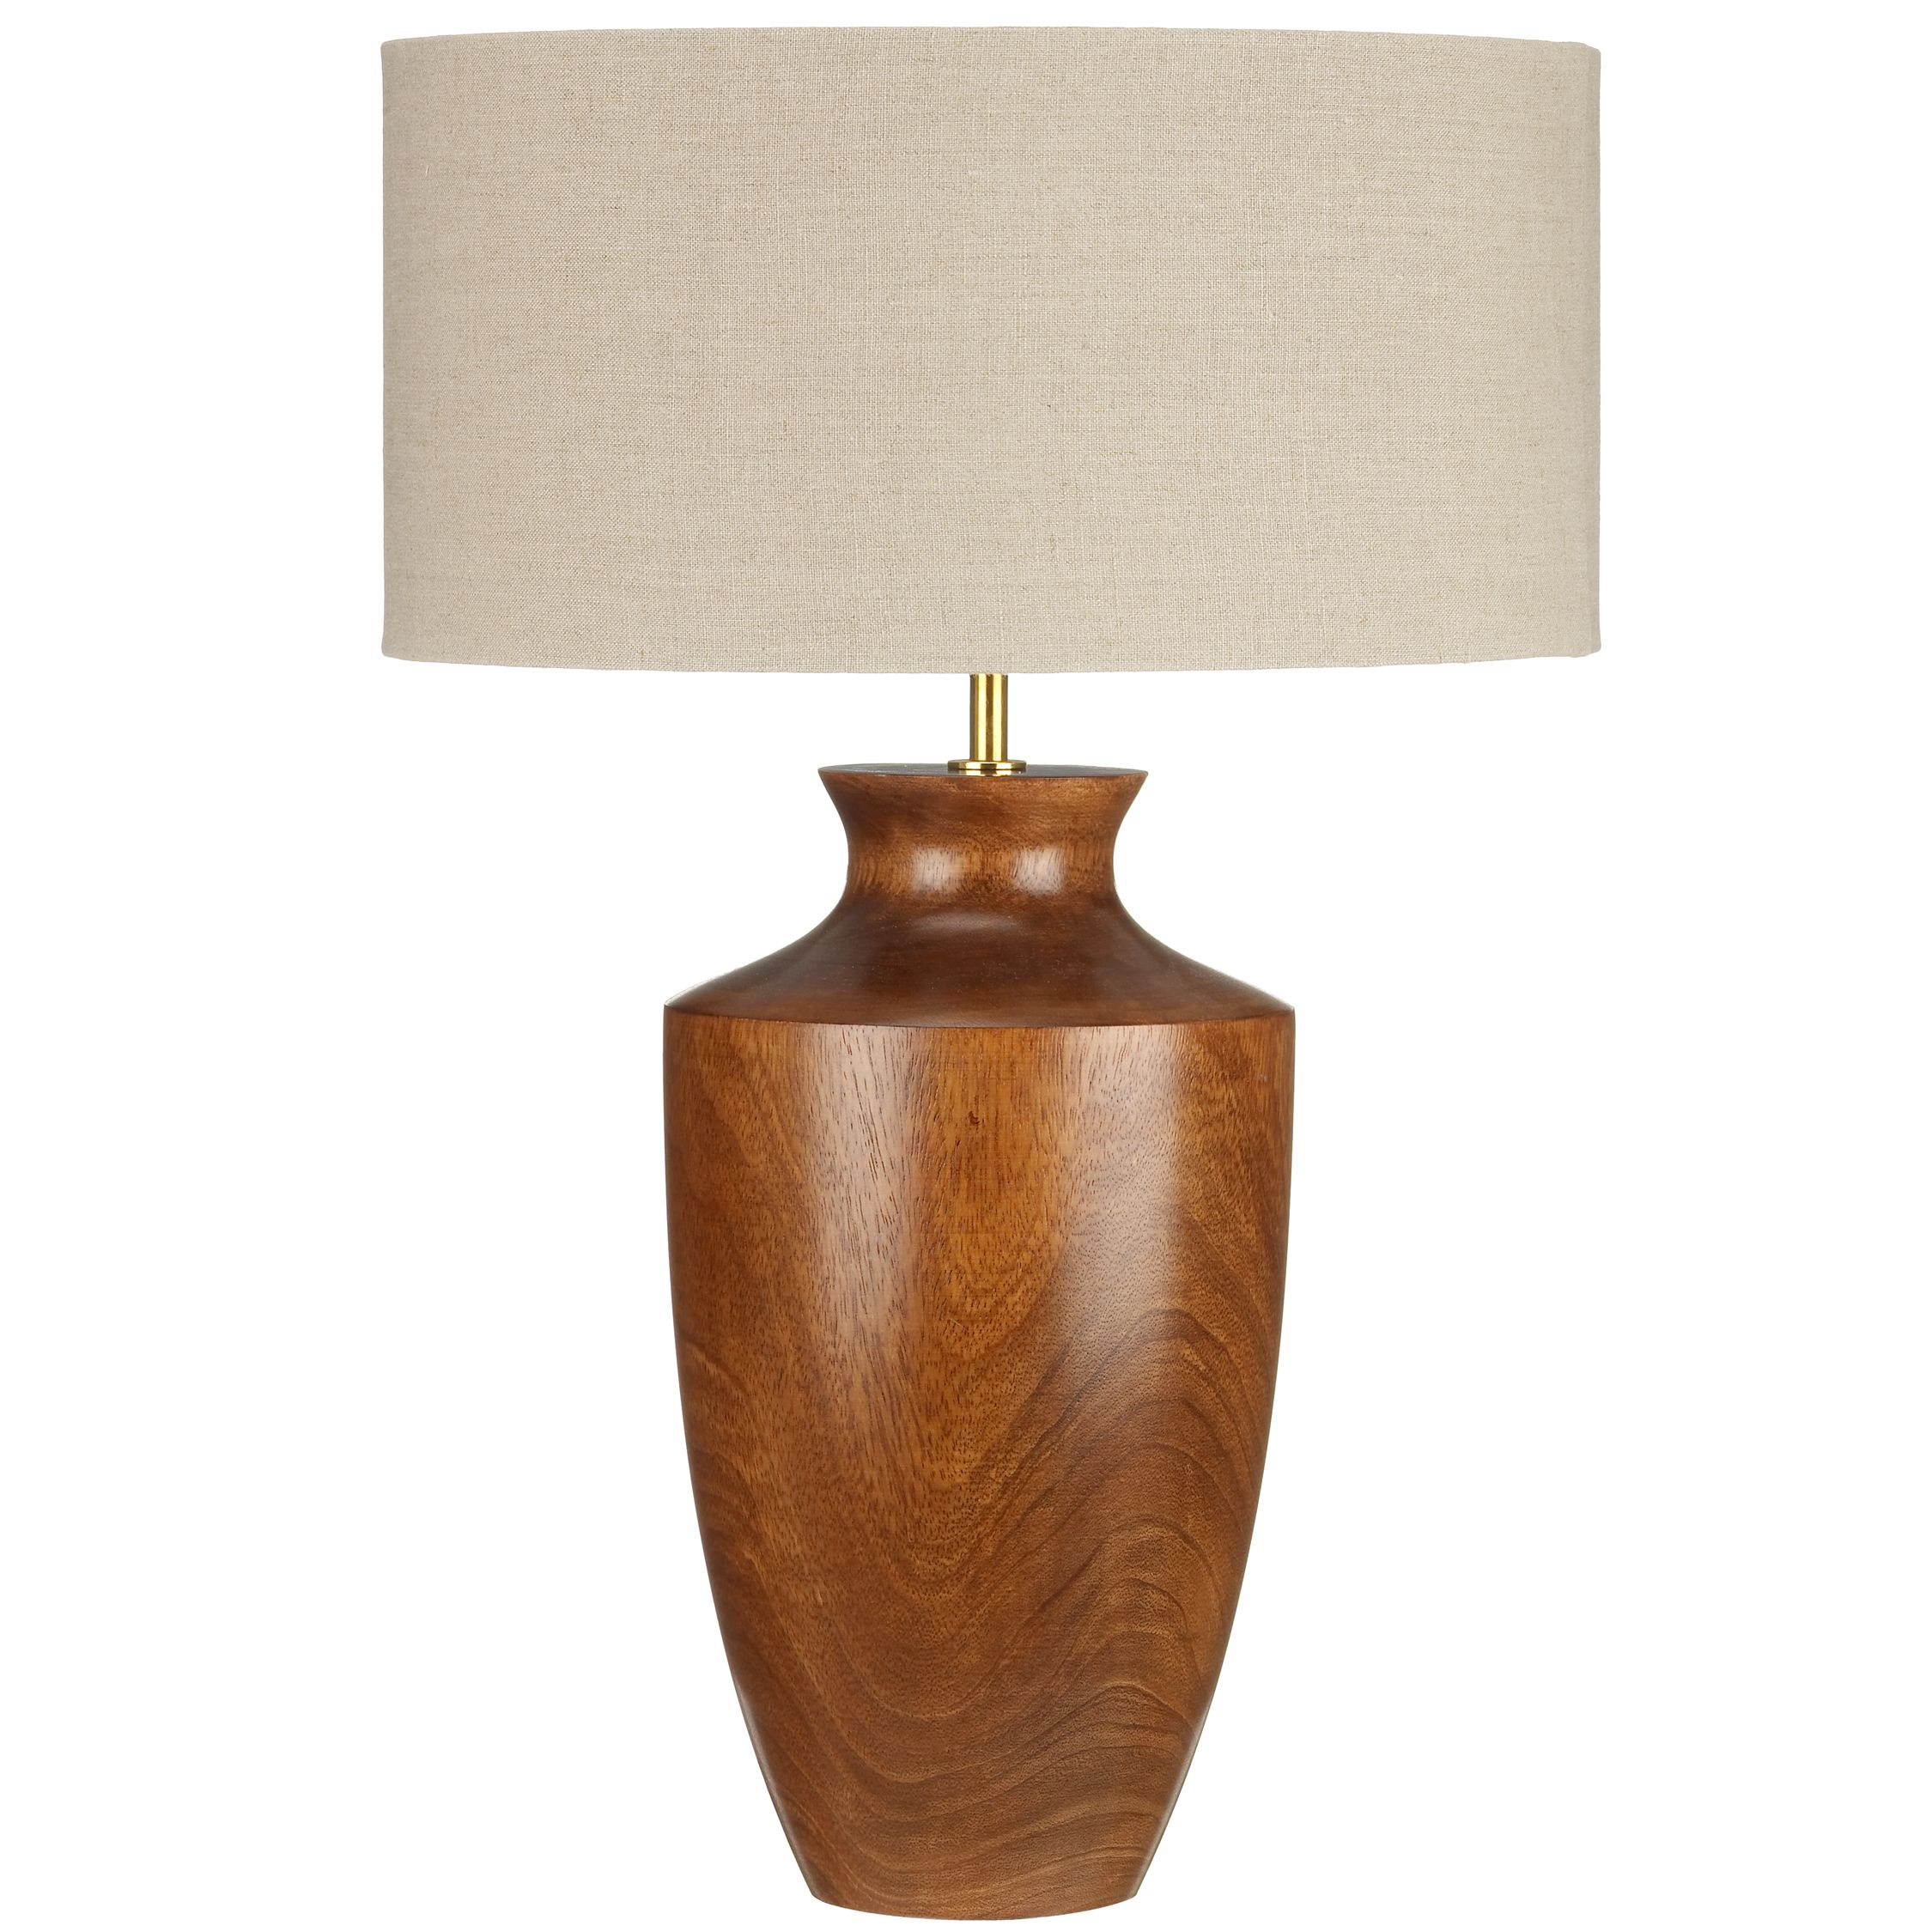 John Lewis Hannah Wood Table Lamp